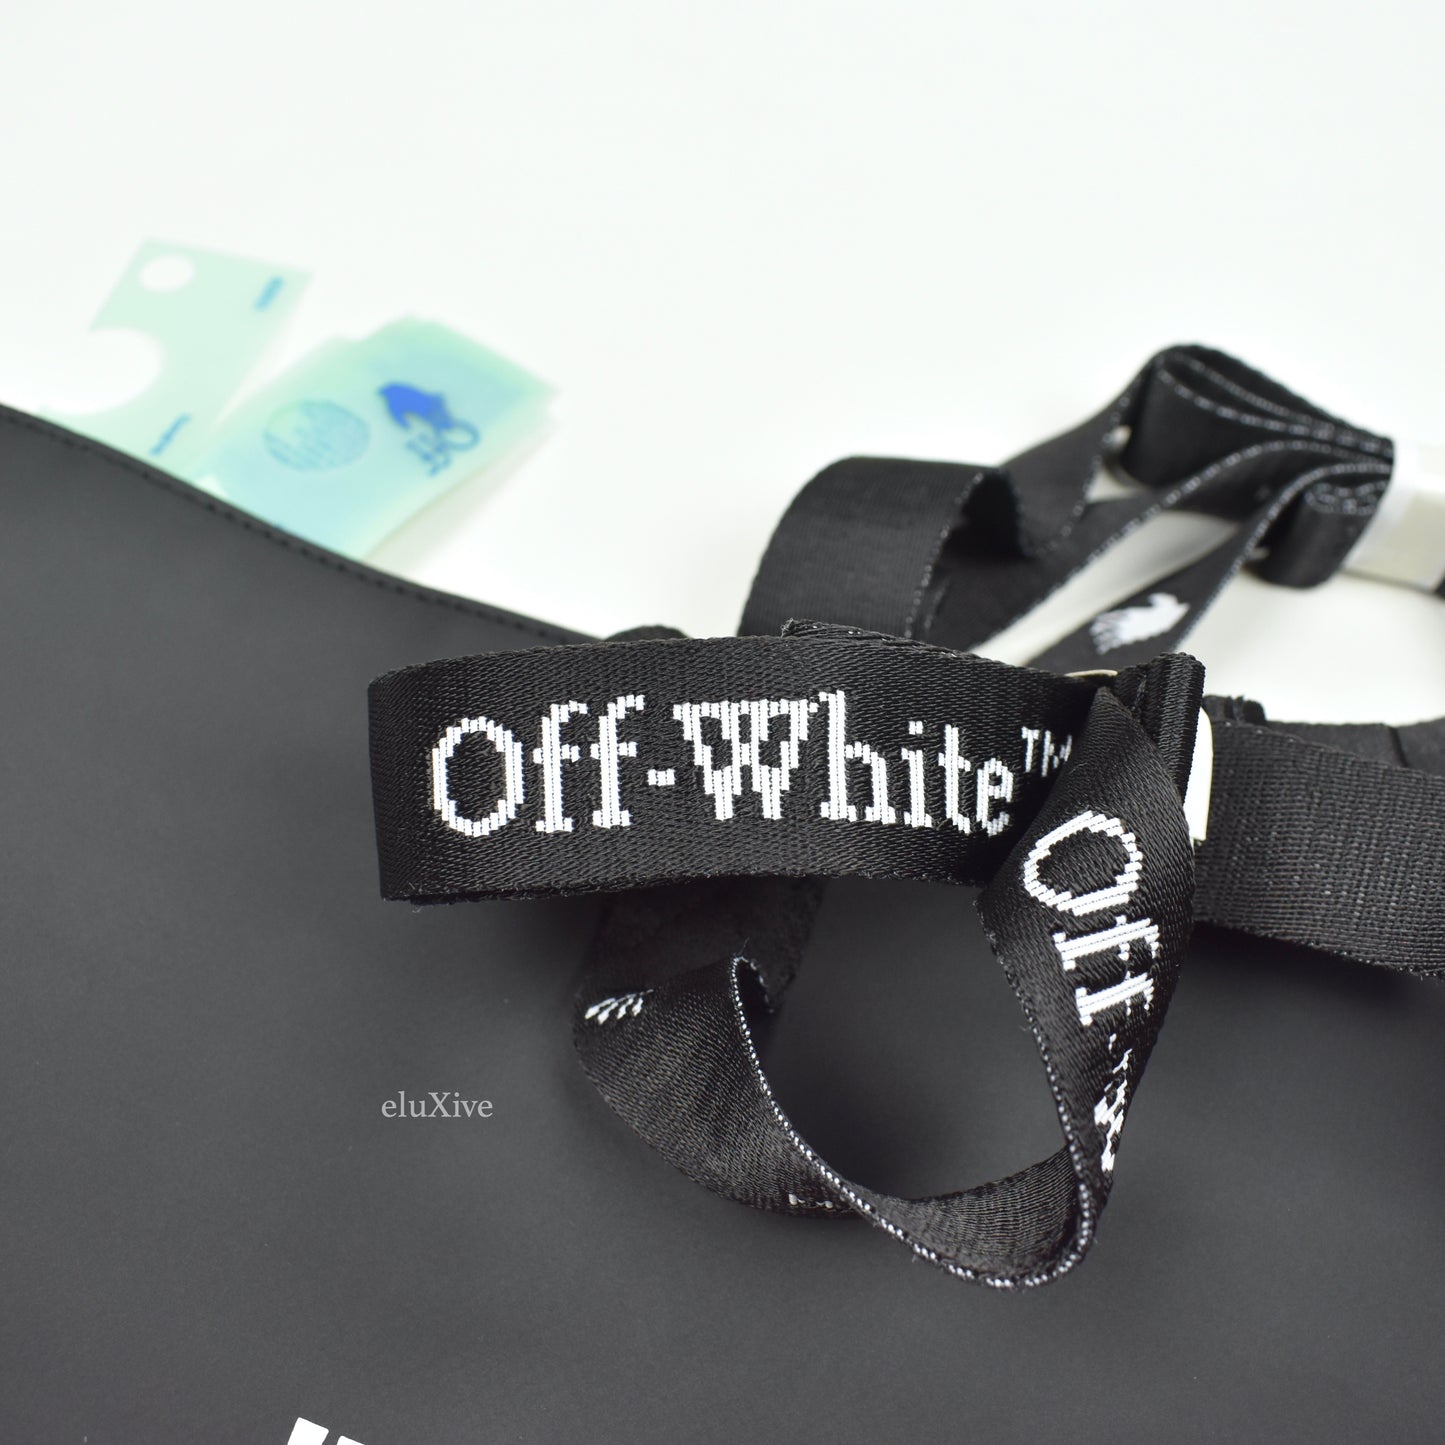 Off-White - Black "SCULPTURE" Logo Tote Bag